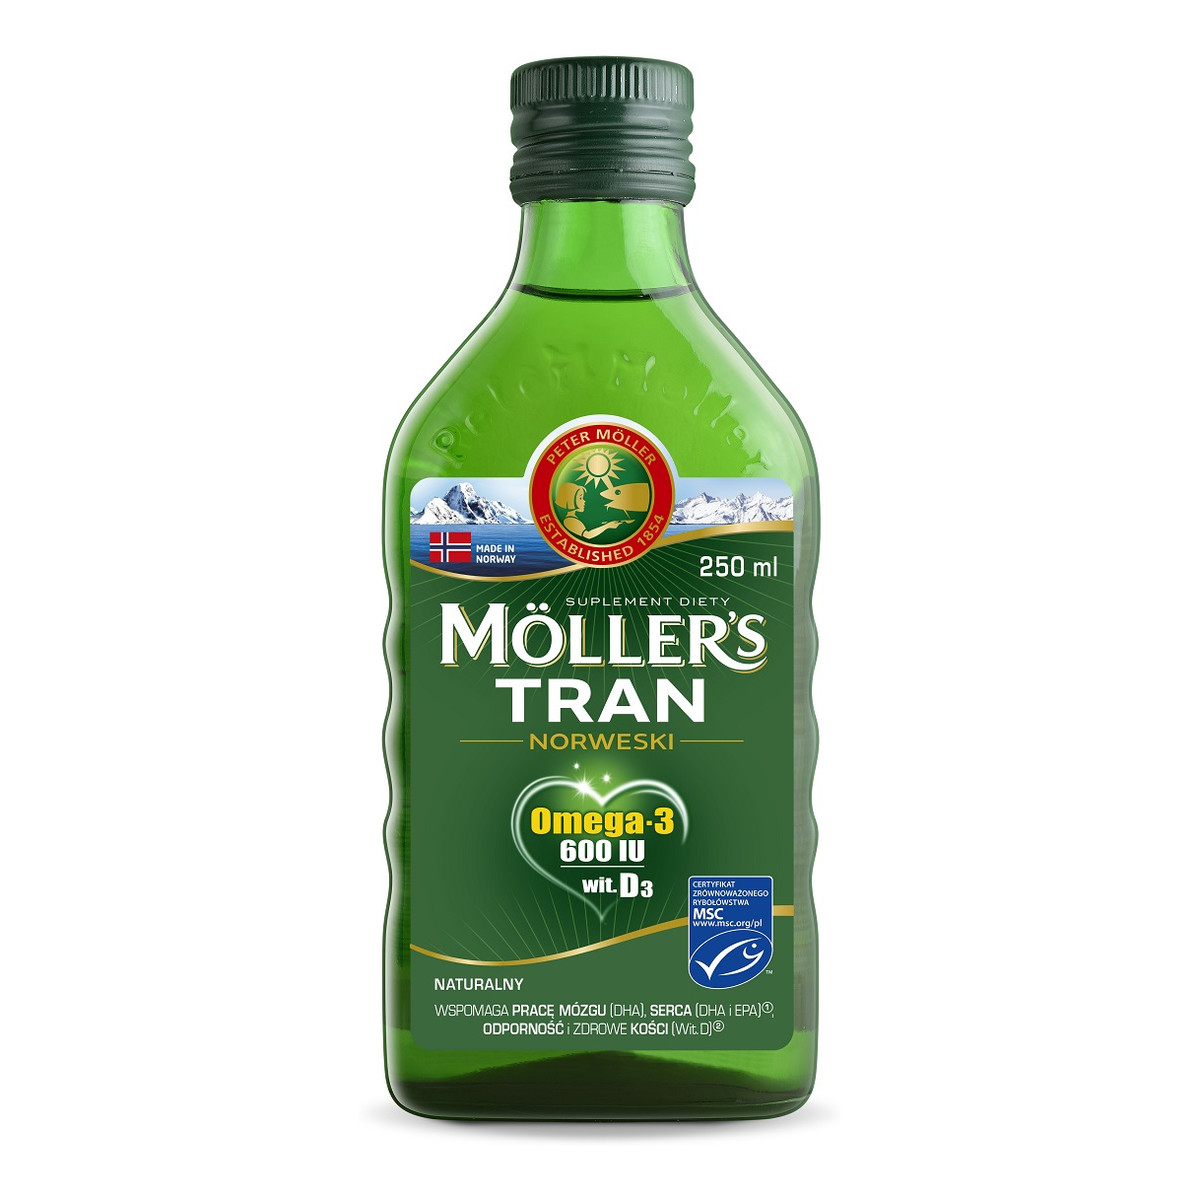 Moller's Tran norweski suplement diety naturalny 250ml